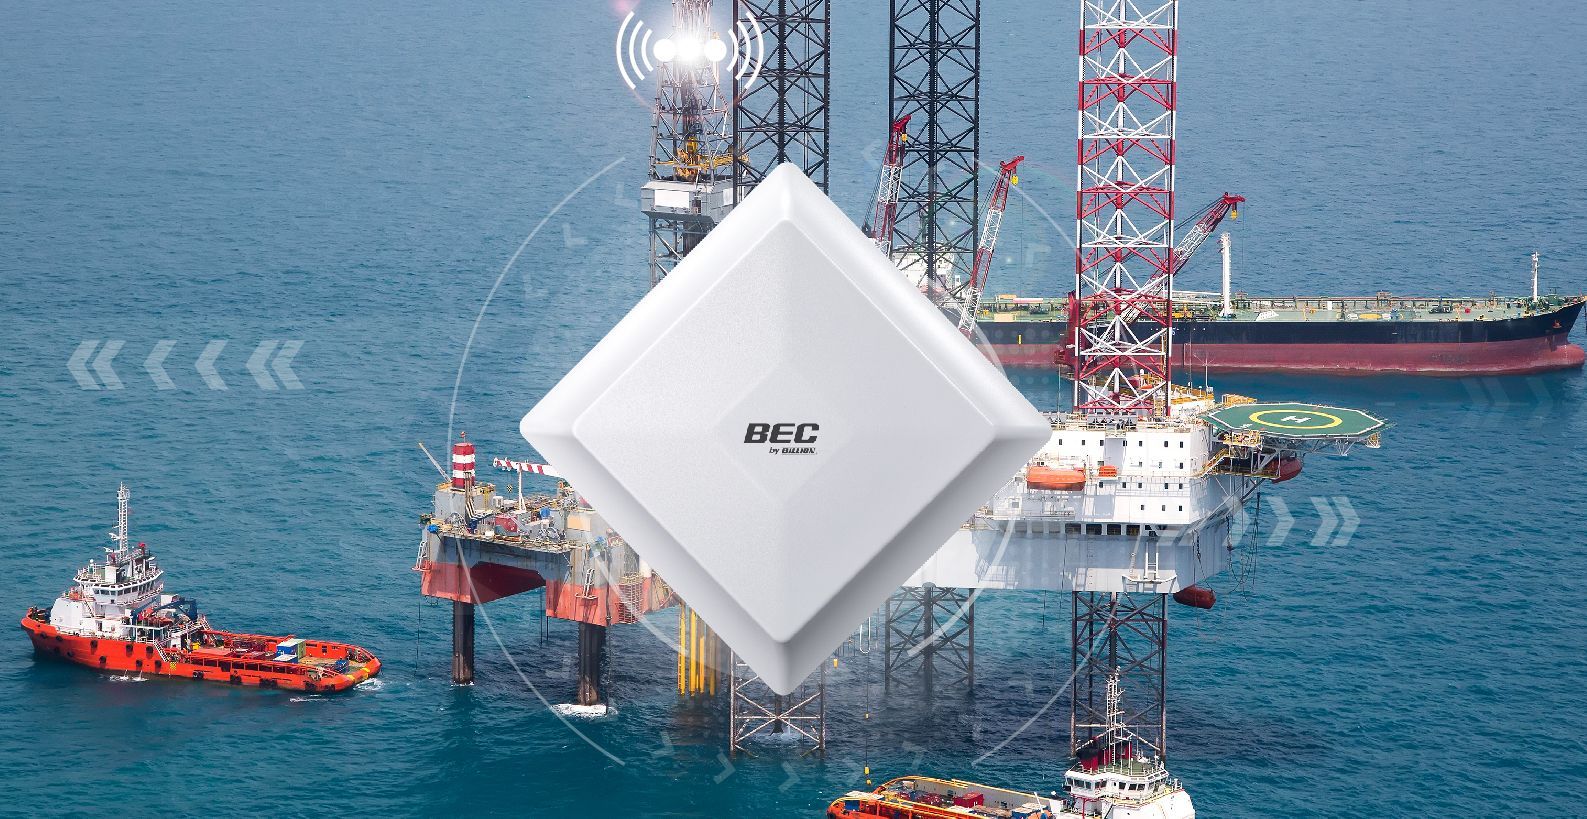 7000R24 connectivity solution provides offshore LTE internet